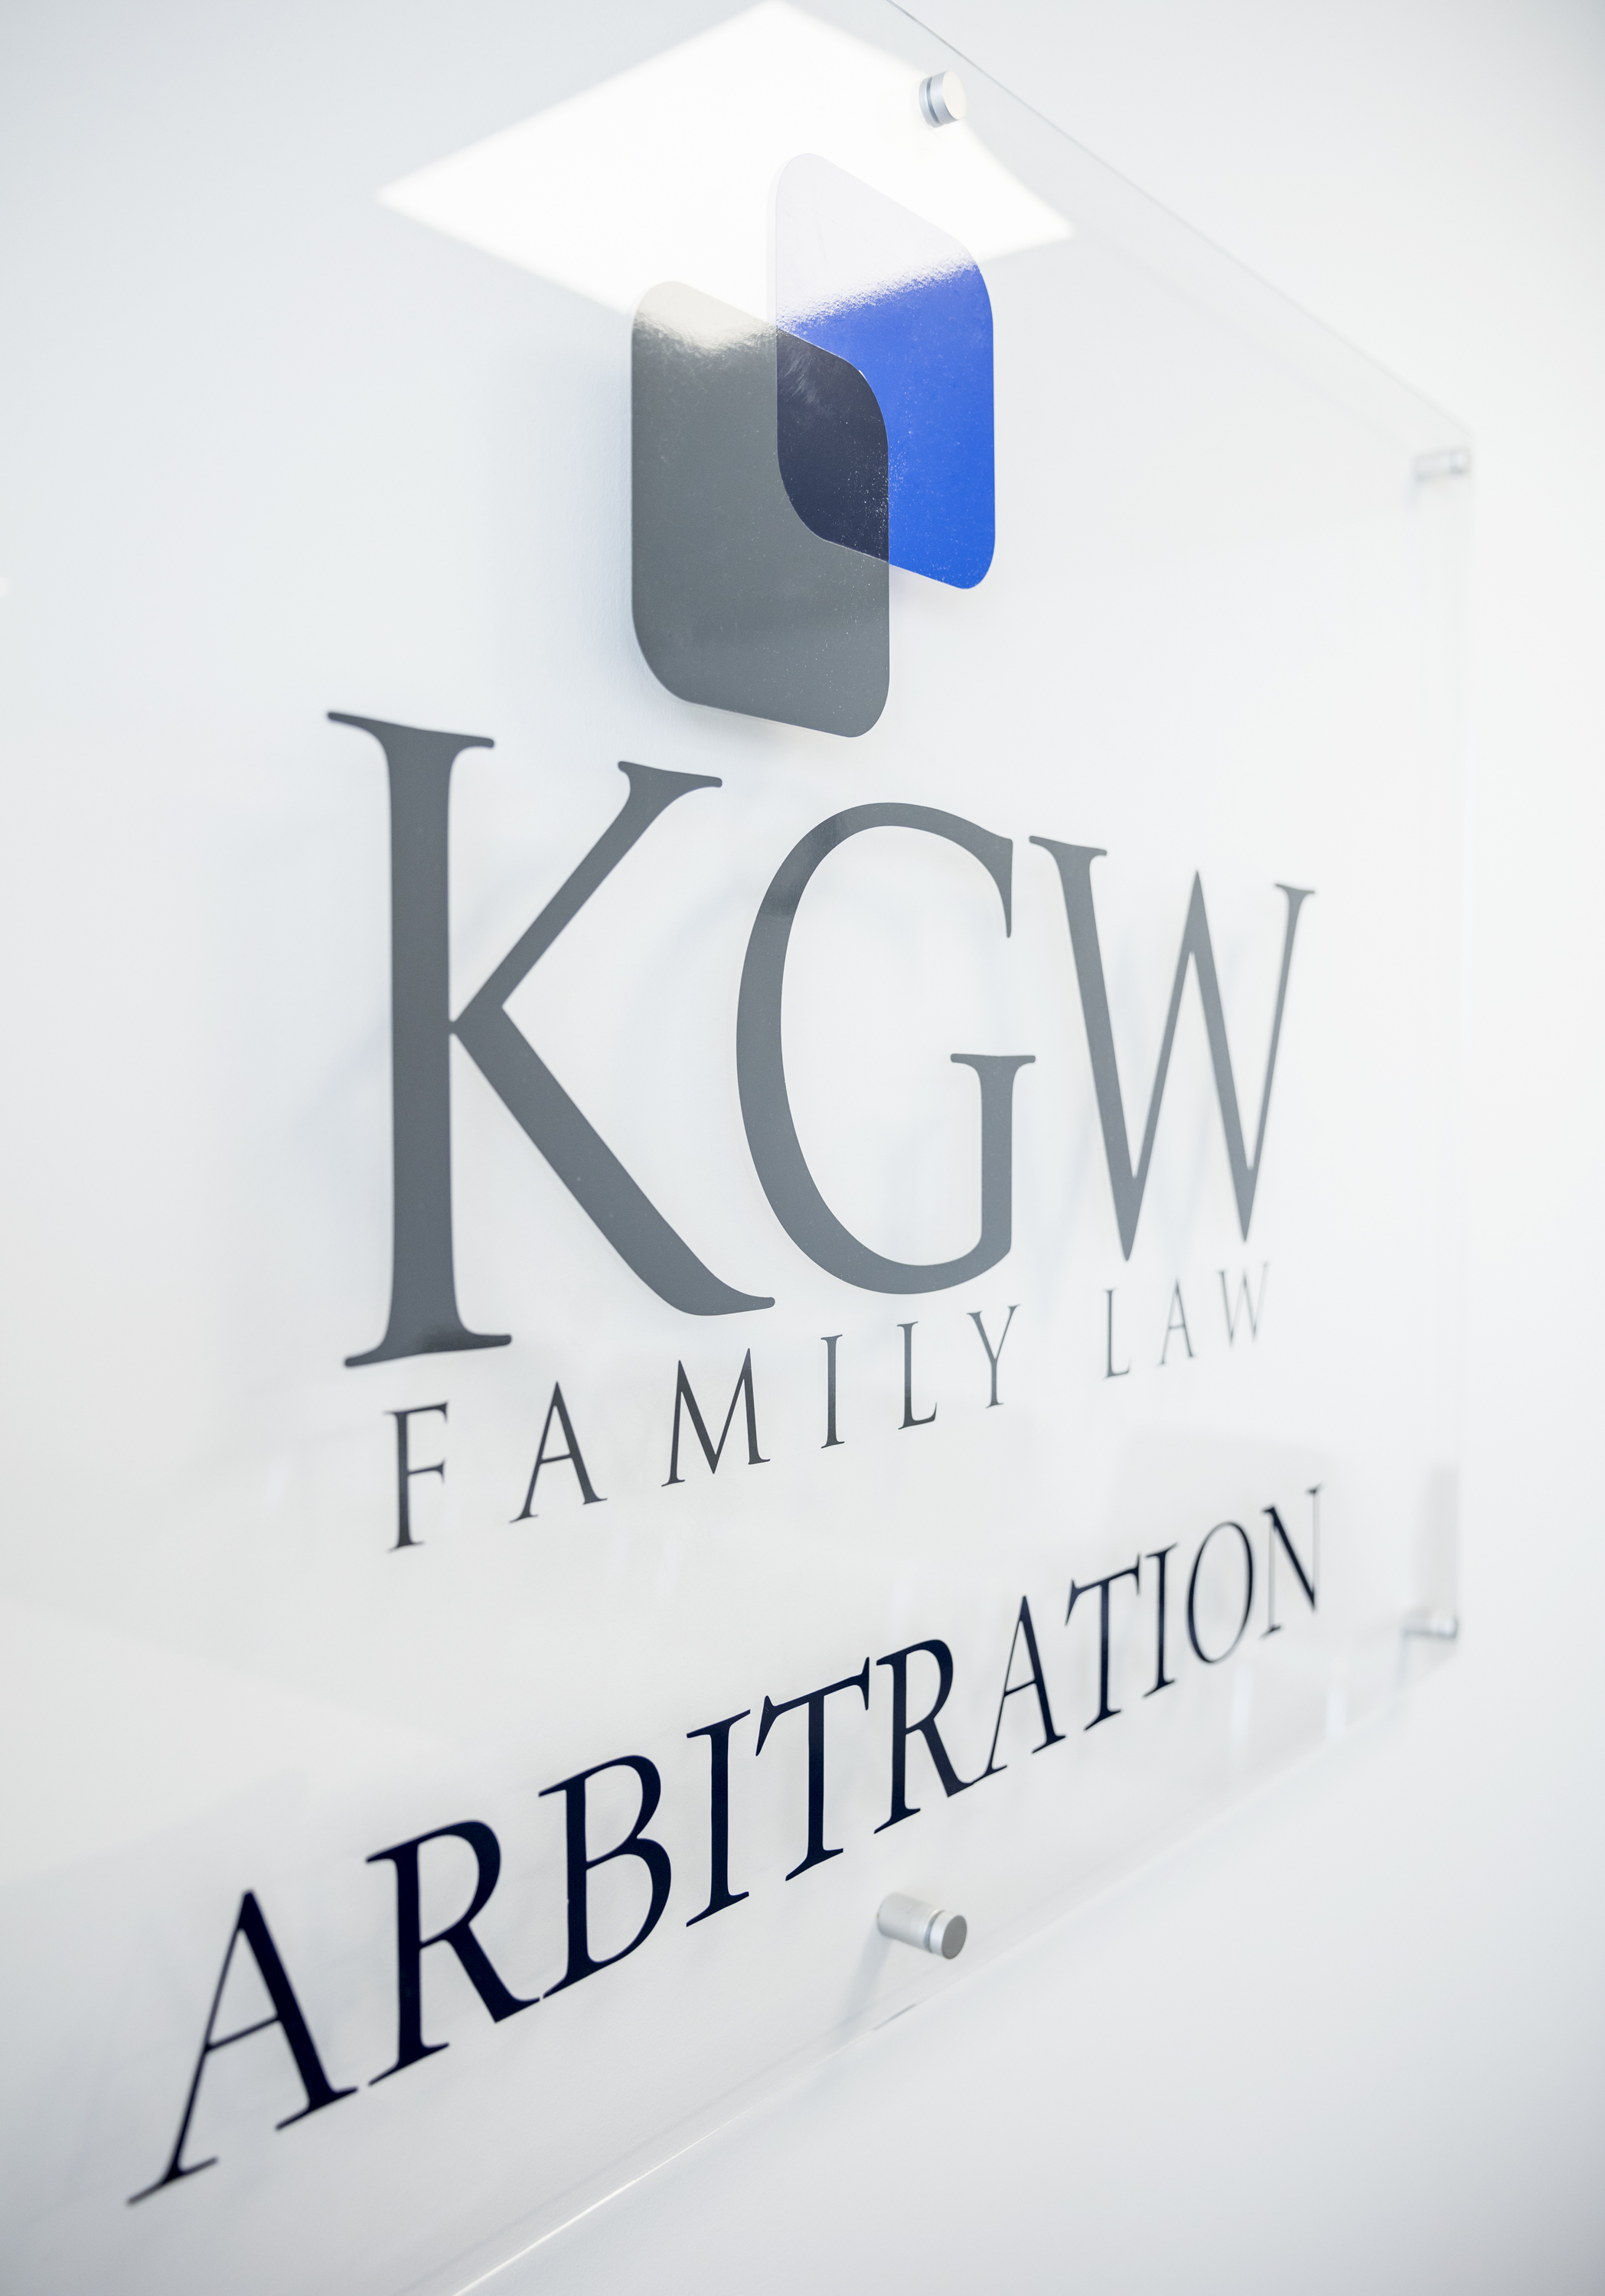 KGW Arbitration